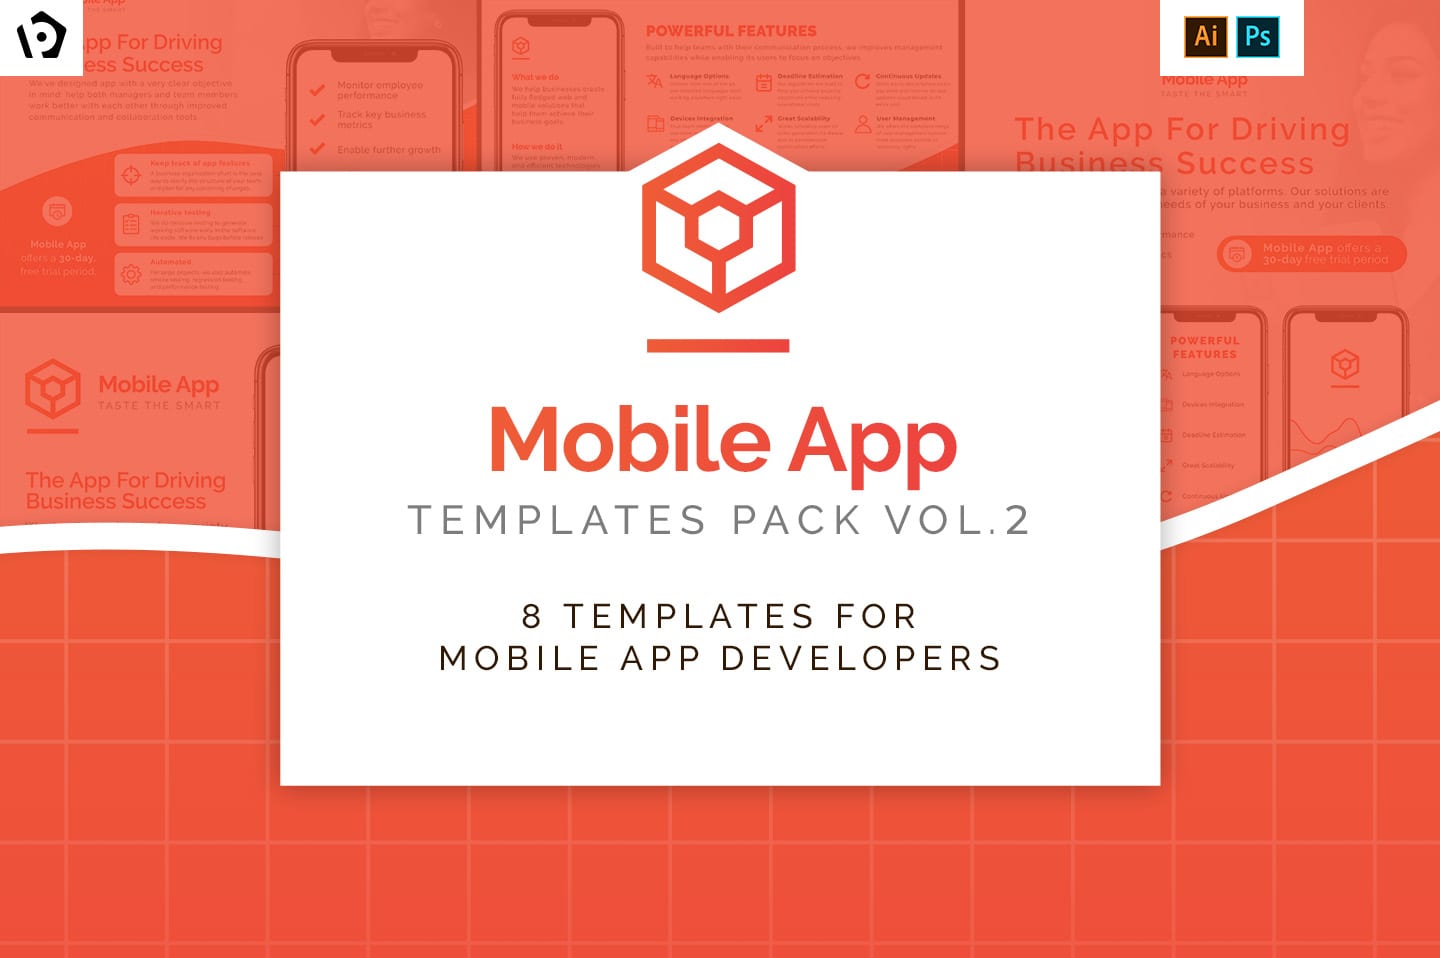 Mobile App Templates Pack vol.2